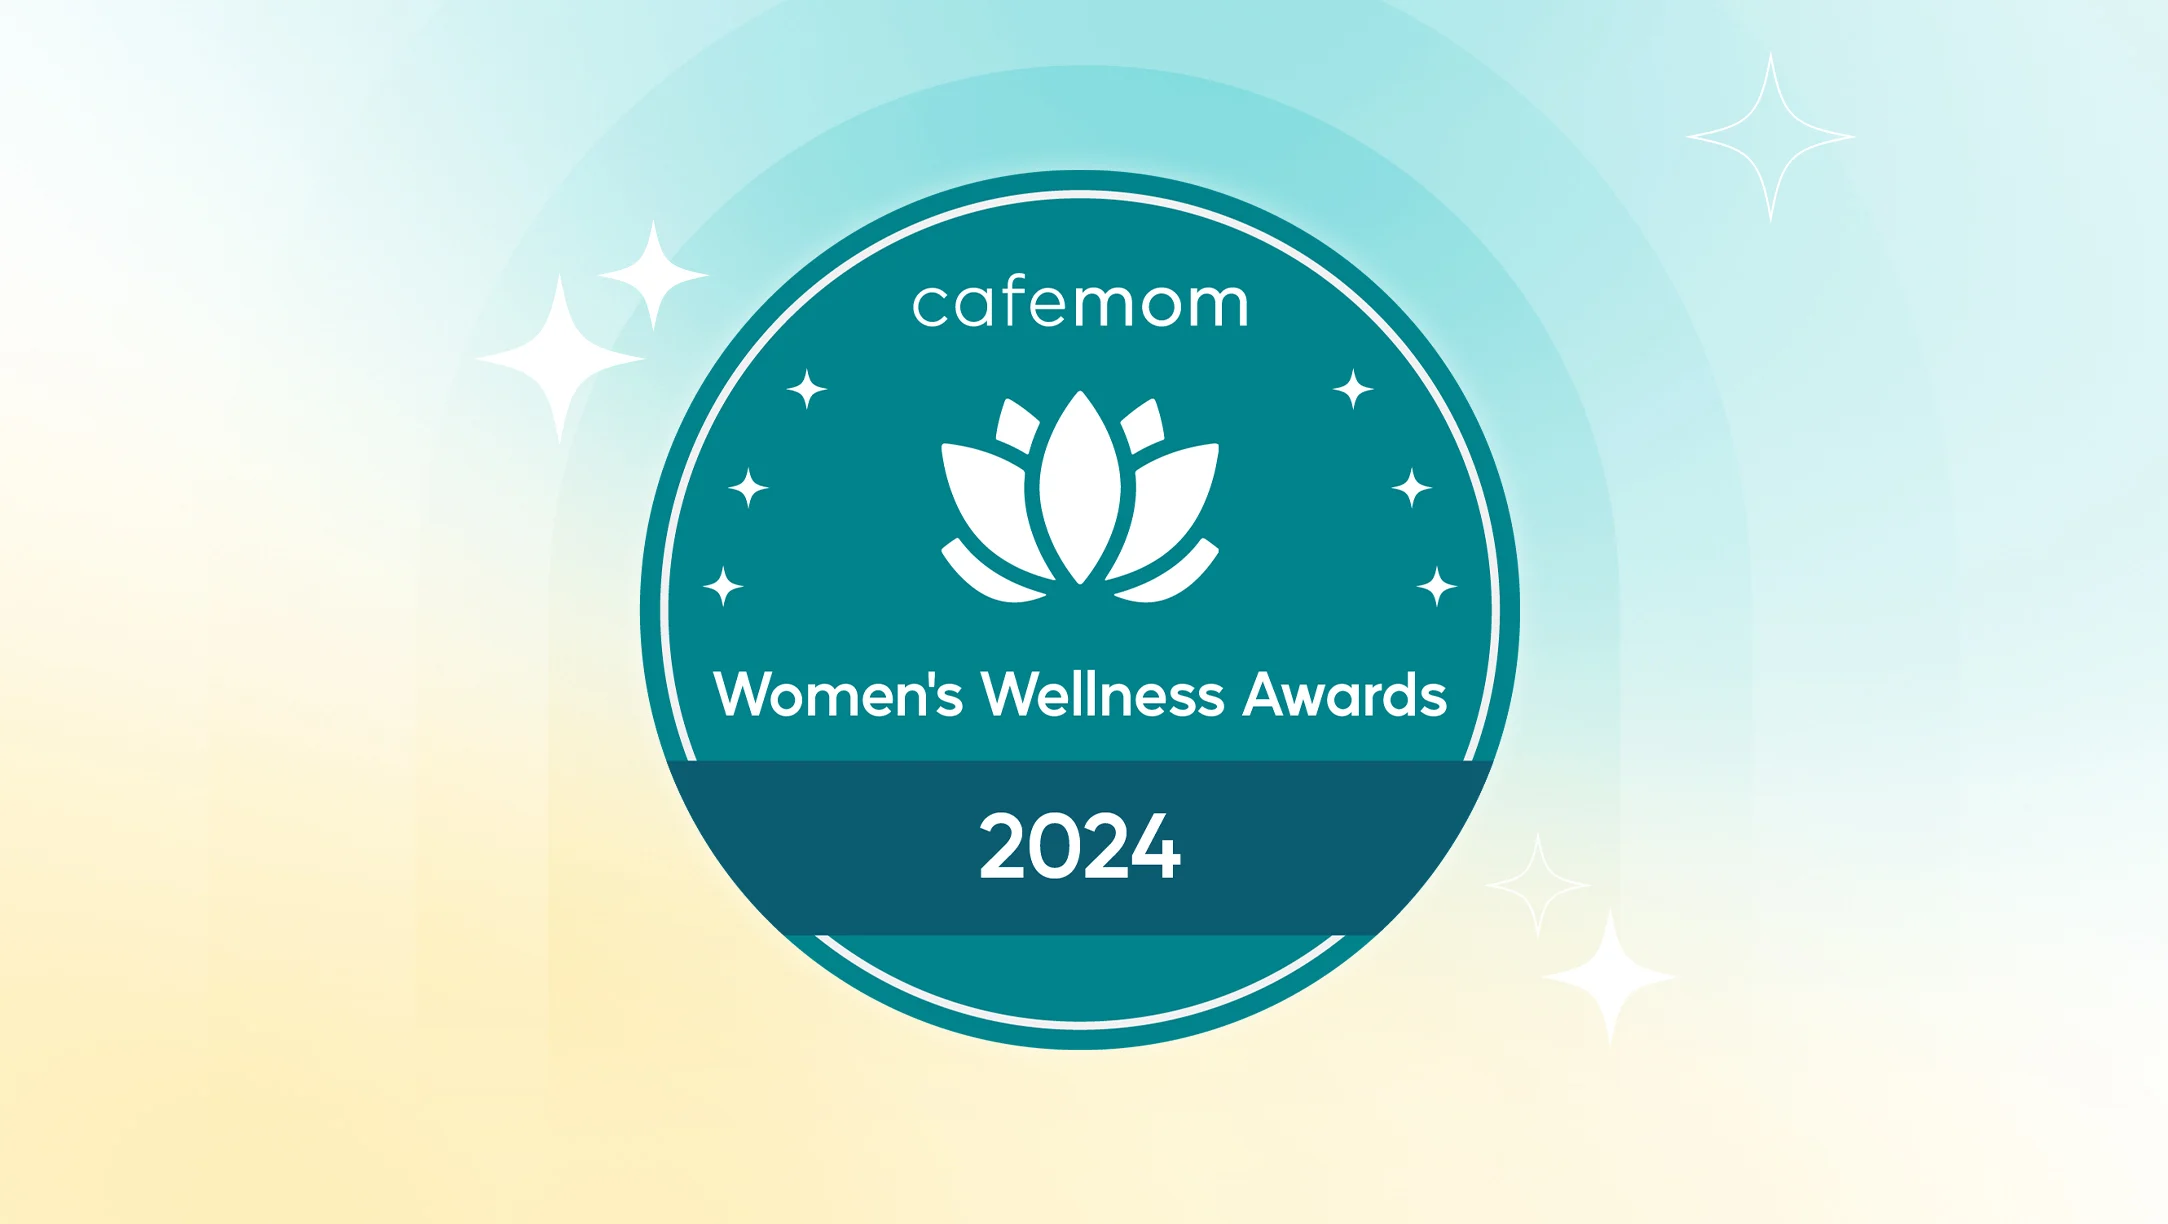 CM Seal Women's Wellness Awards featured Image 2024